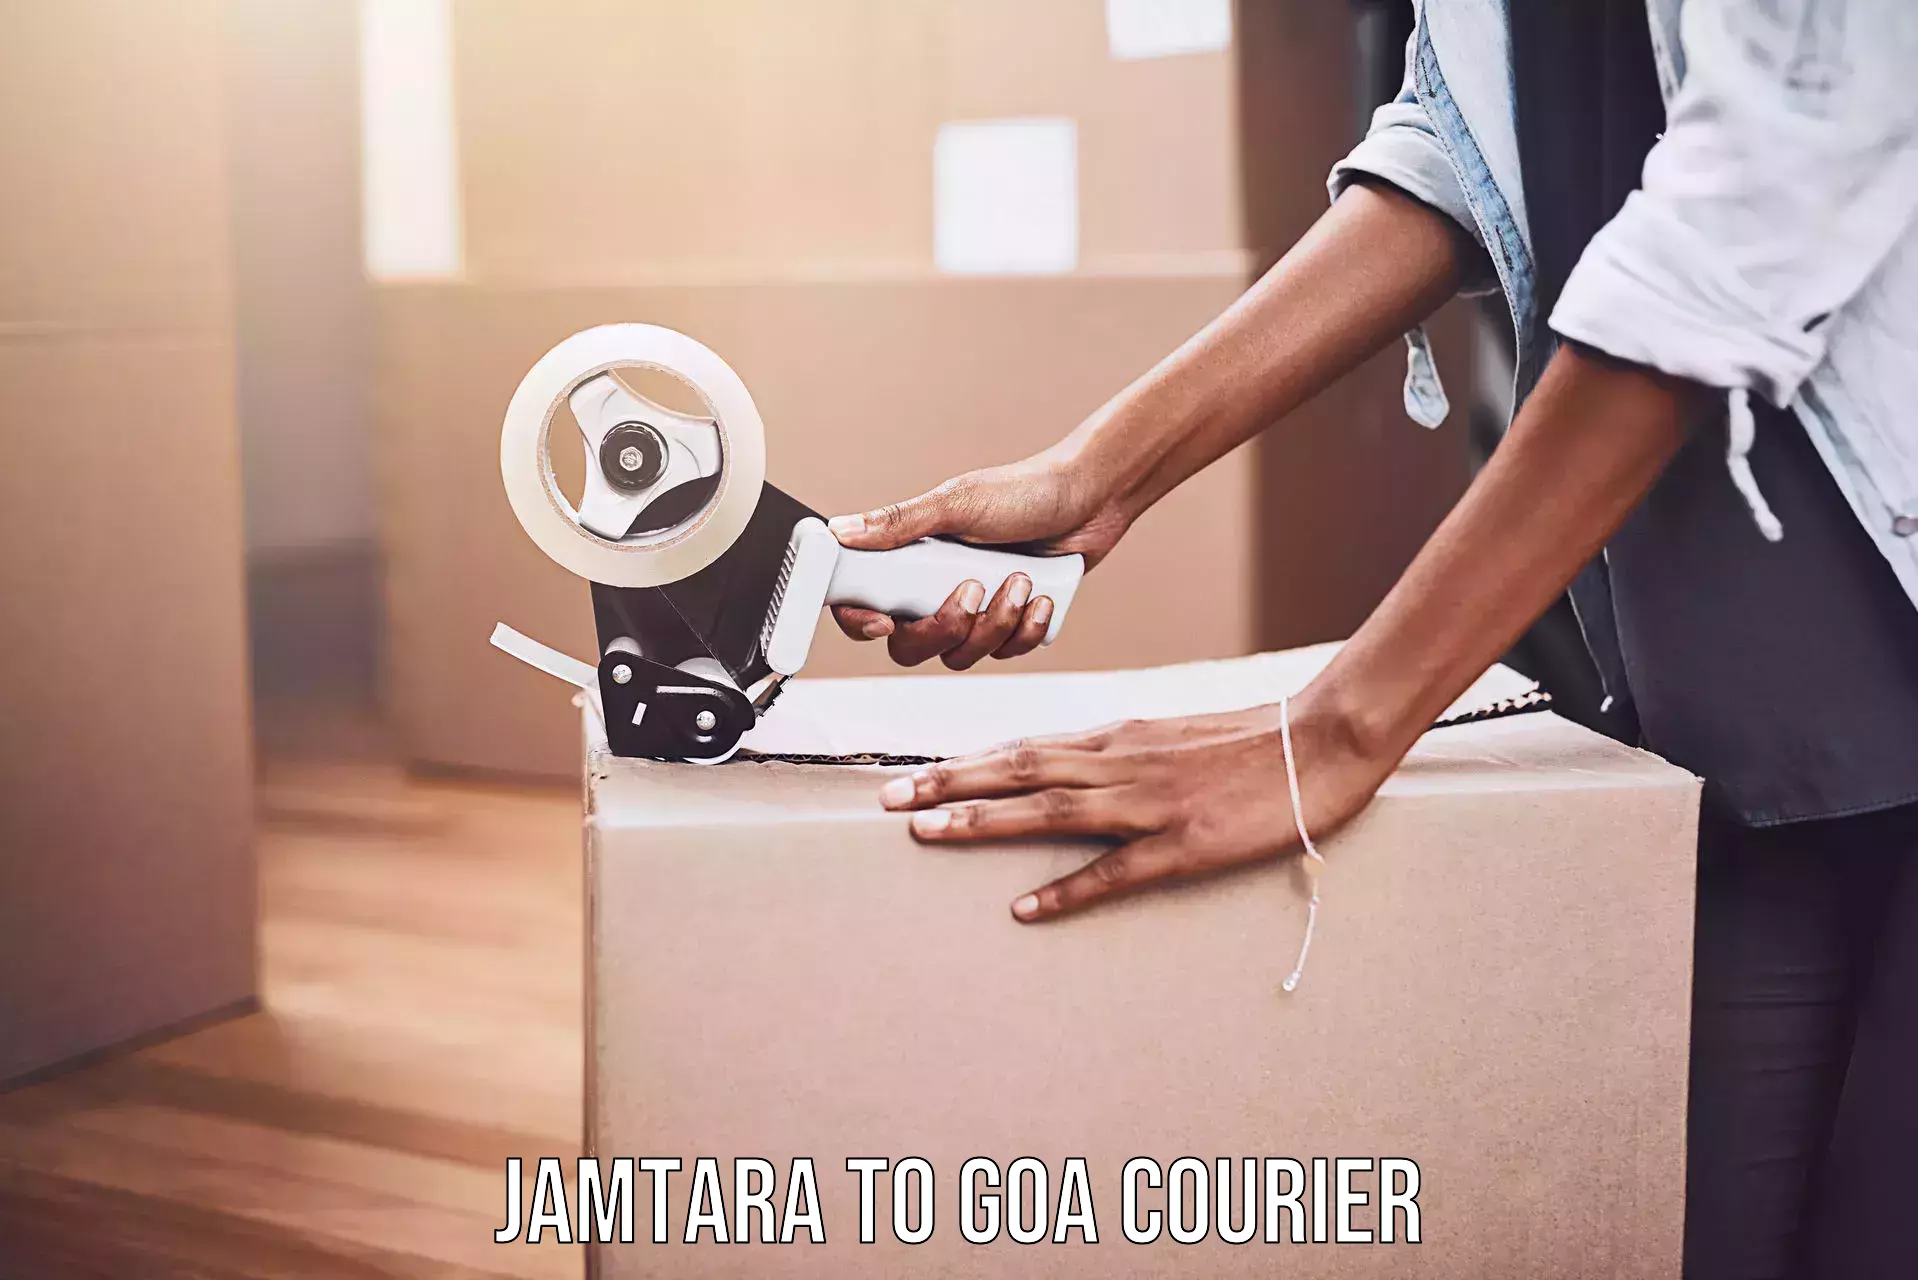 Next-day delivery options Jamtara to Panaji